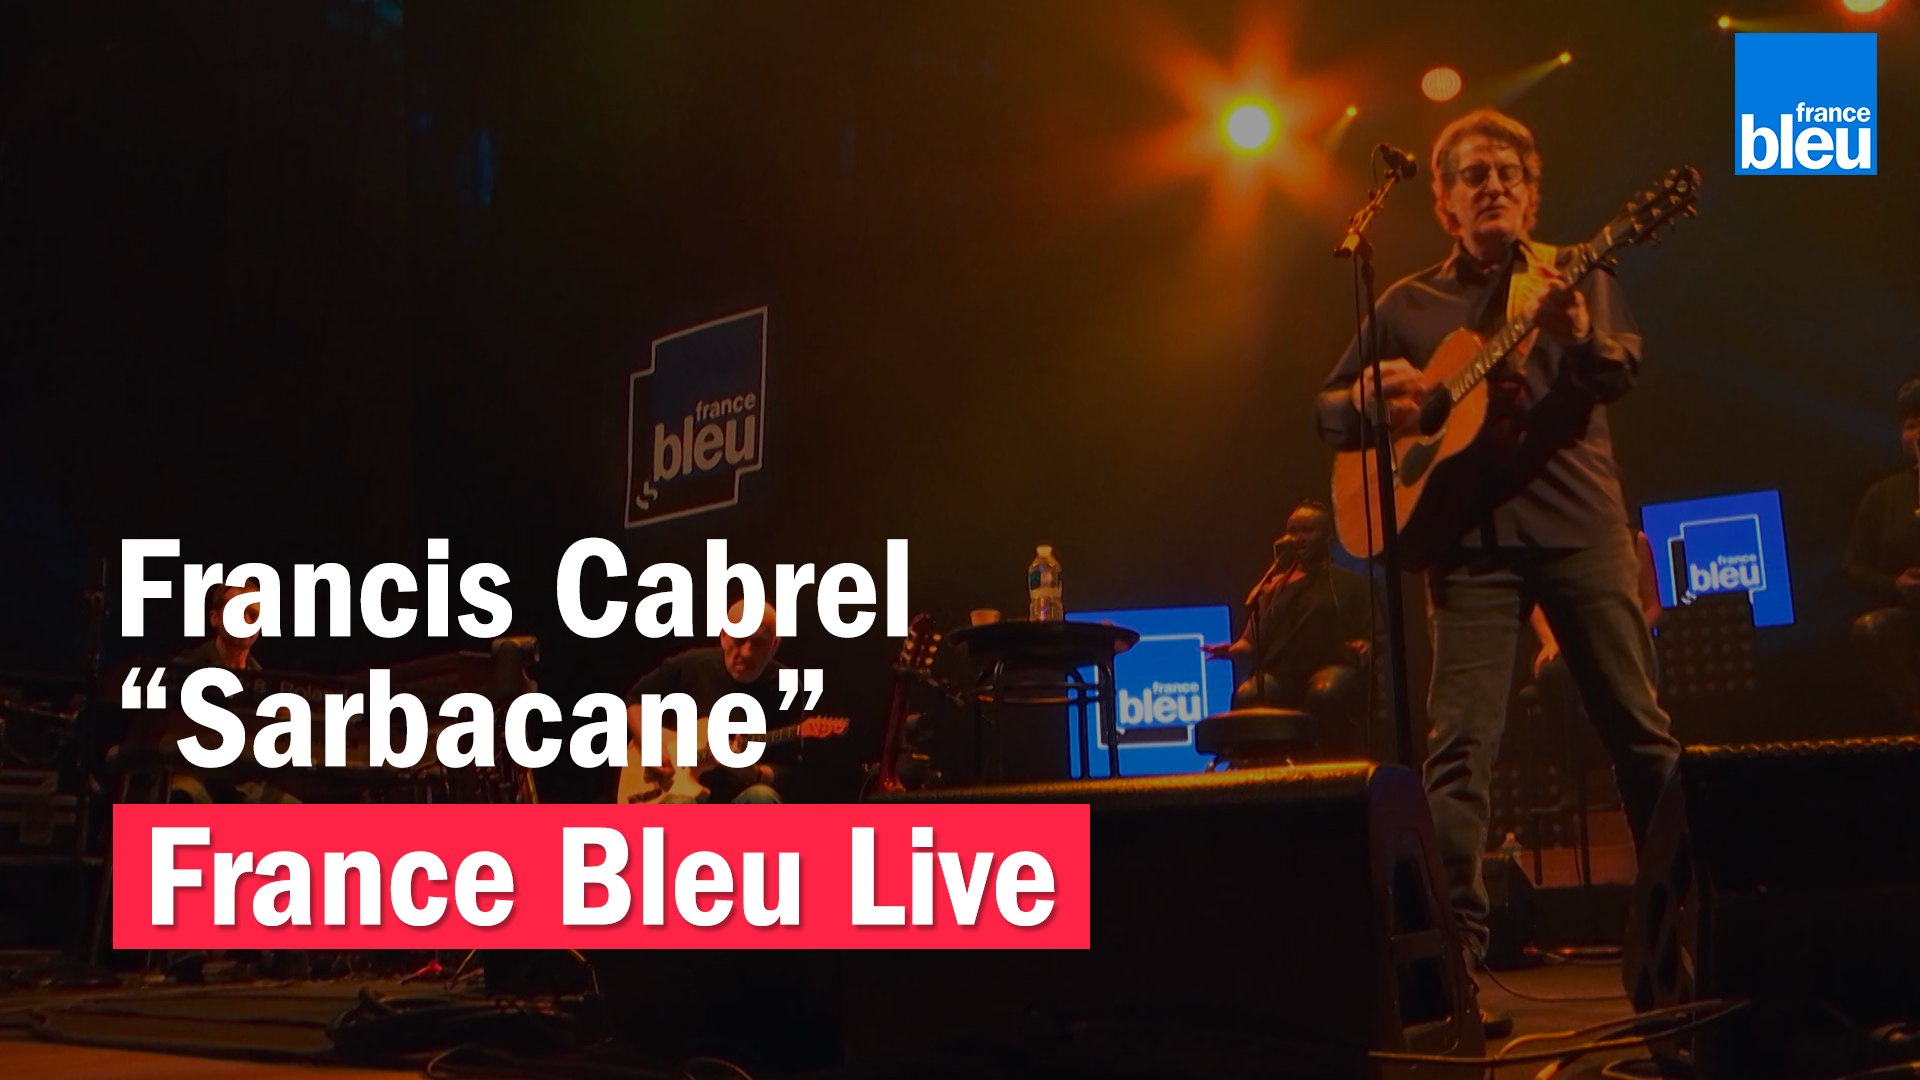 Francis Cabrel "Sarbacane" - France Bleu Live - Vidéo Dailymotion